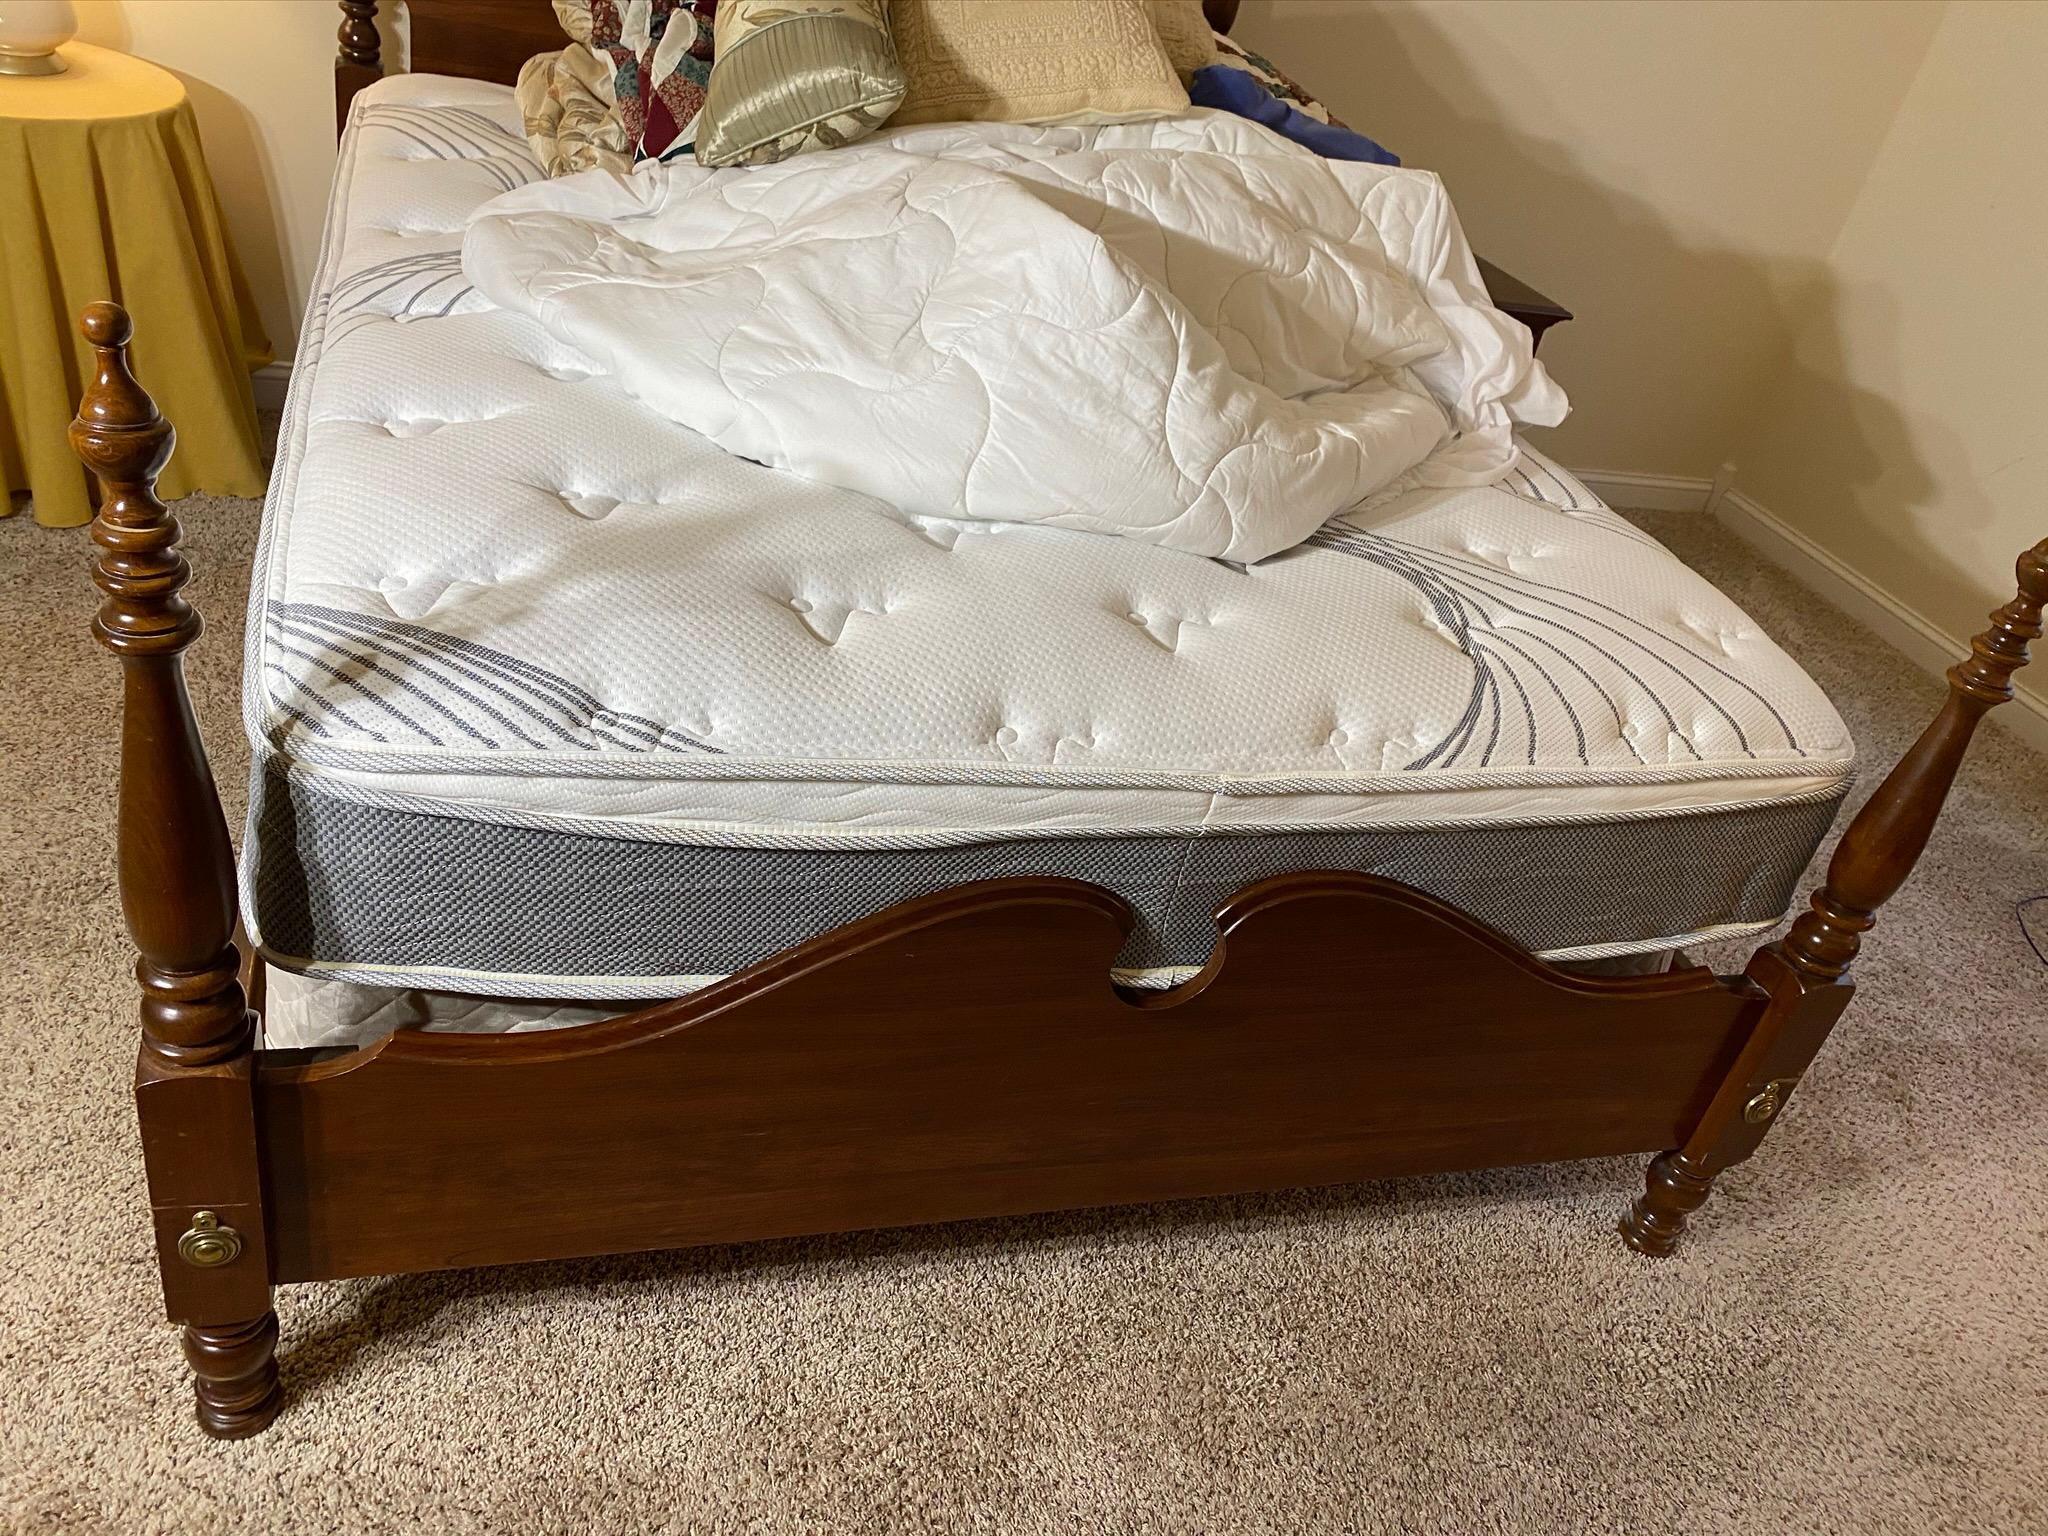 Vintage Cherry wood Queen Sized Bed w/newer mattress